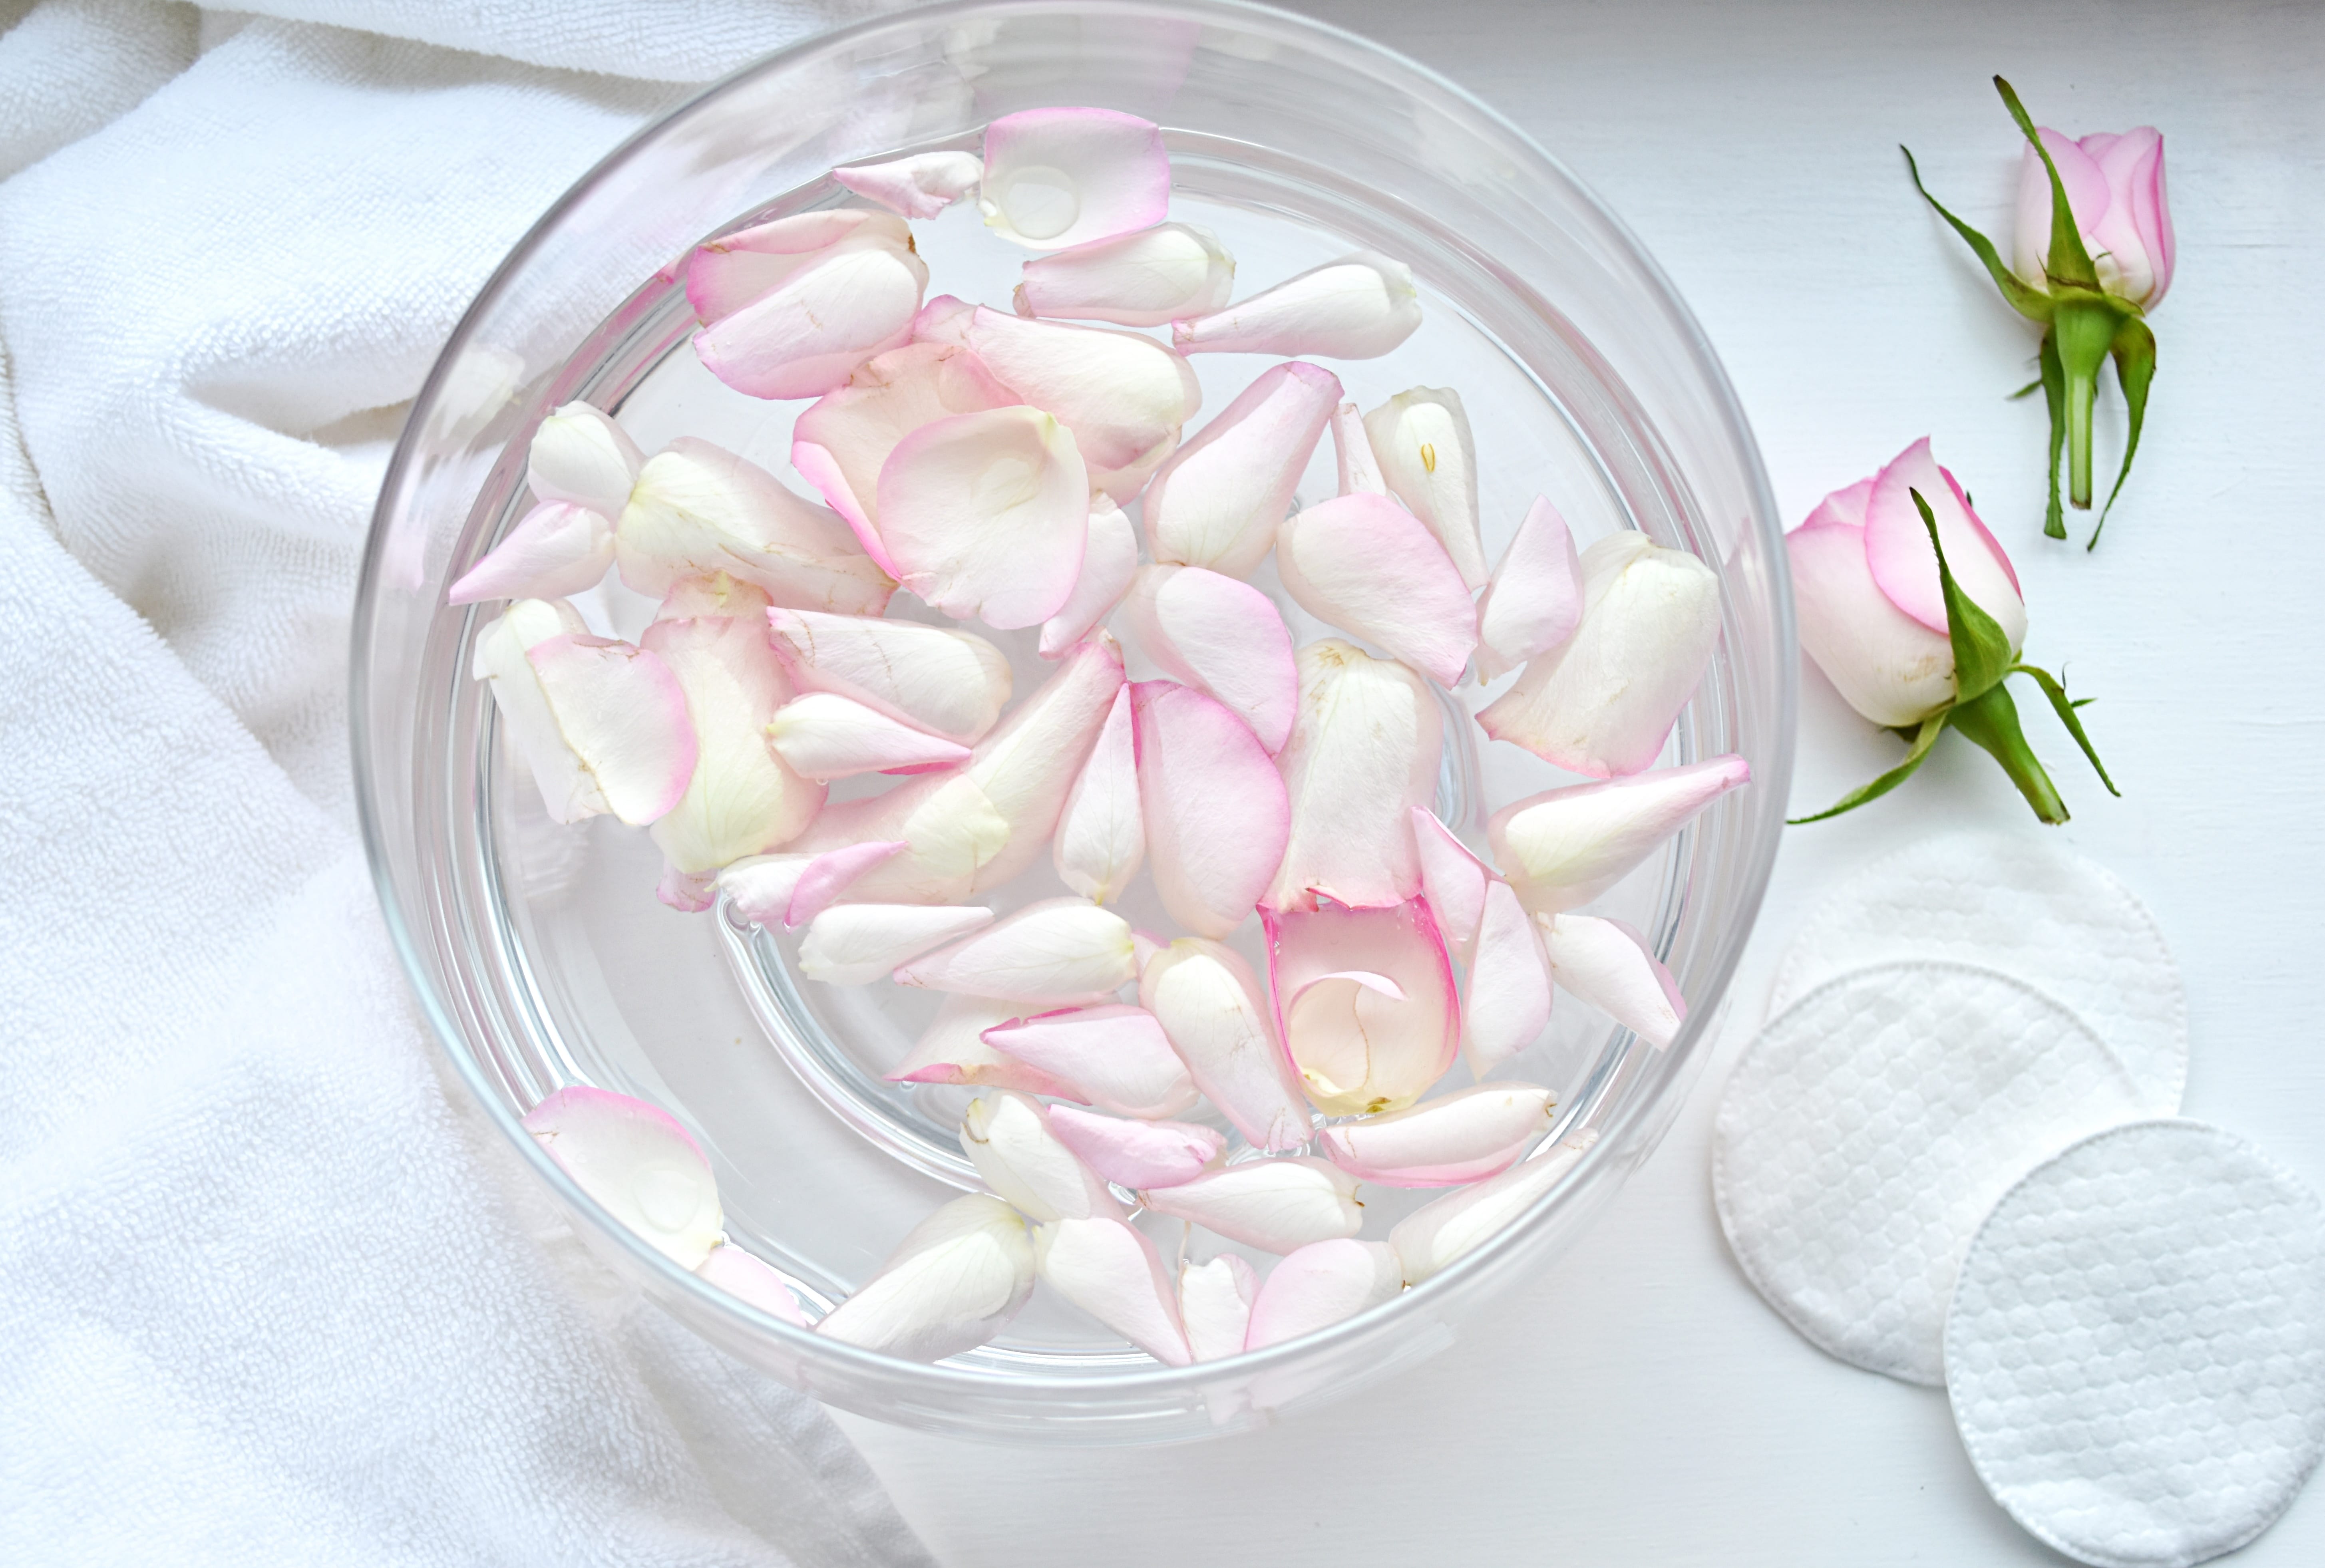 Preparing roses water, pink rose petals in glass bowl, for skin care and spa.